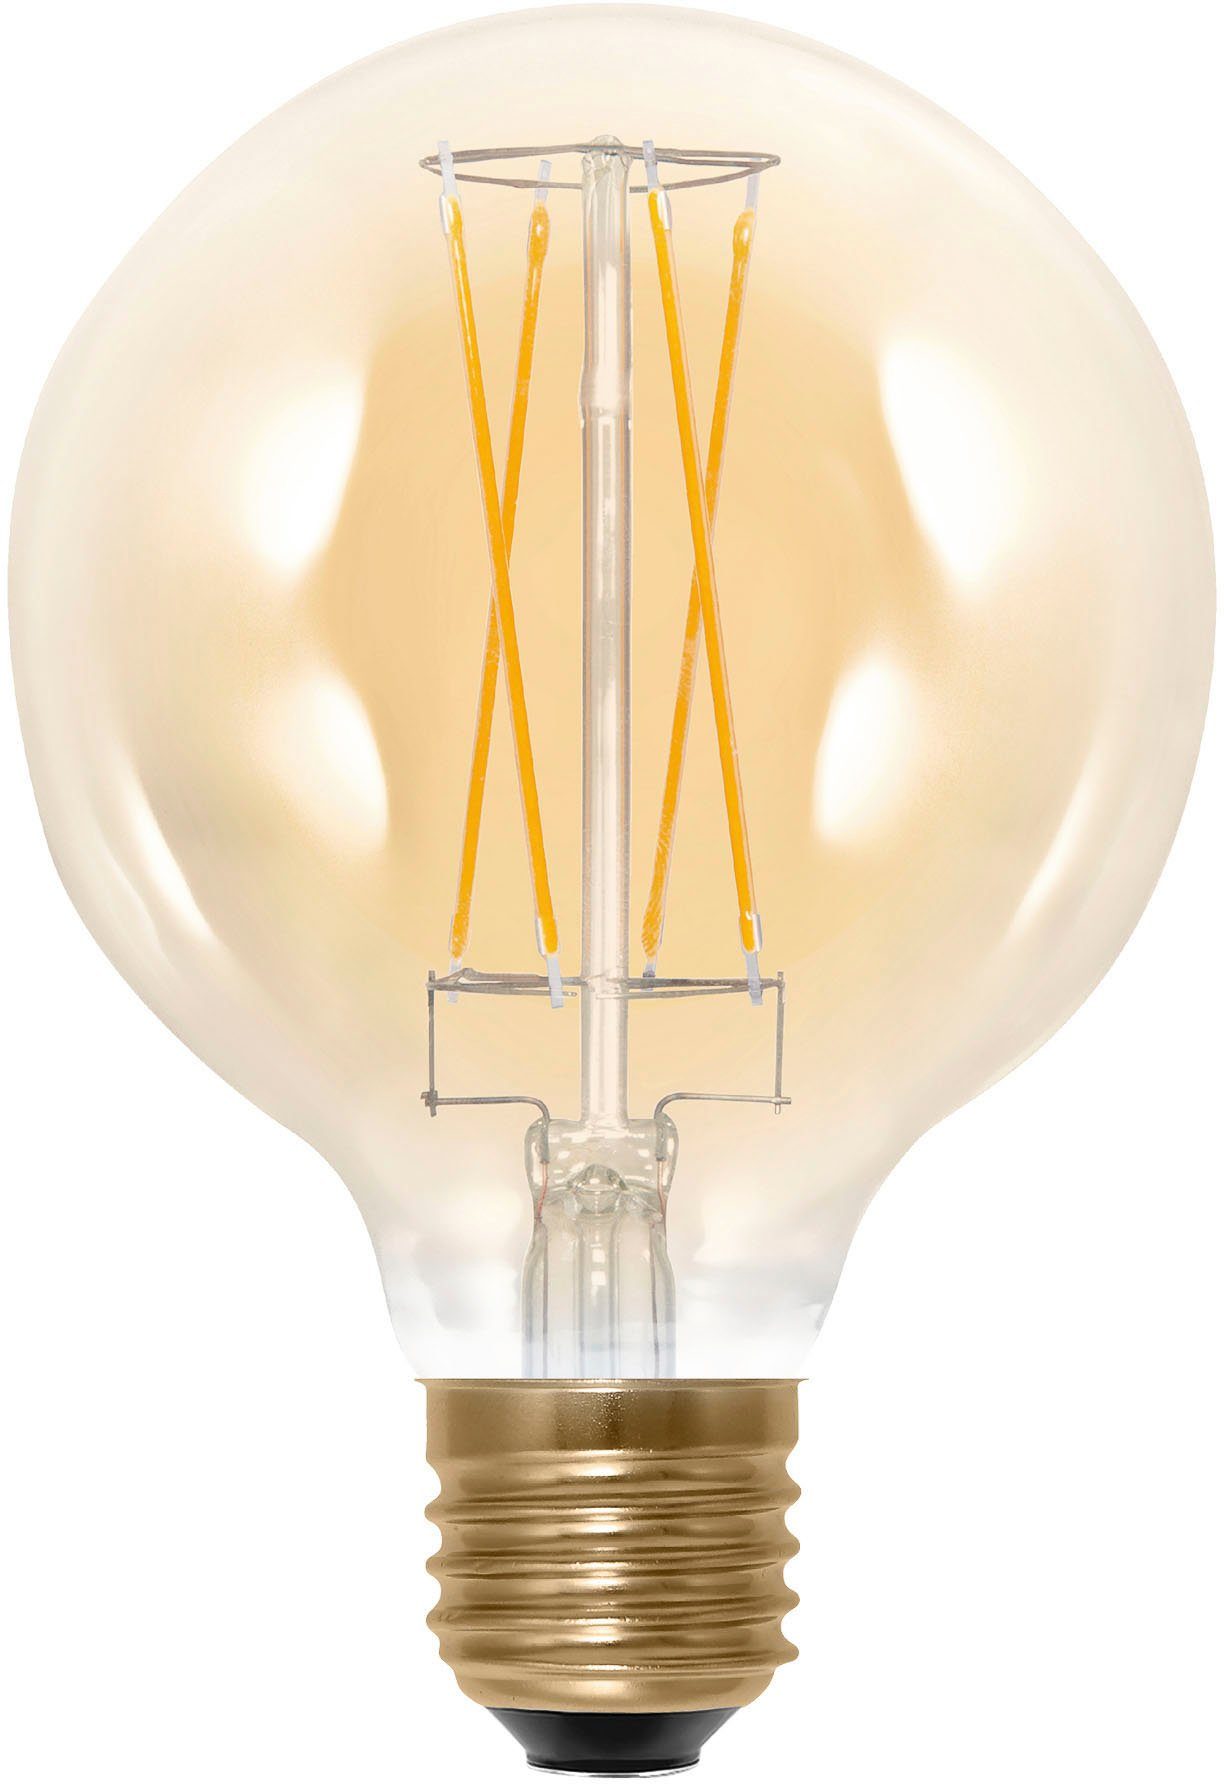 95 Extra-Warmweiß, 5W, 95 LED St., E27, Globe LED-Leuchtmittel 90, CRI Globe dimmbar LED 1 E27, gold, gold, SEGULA